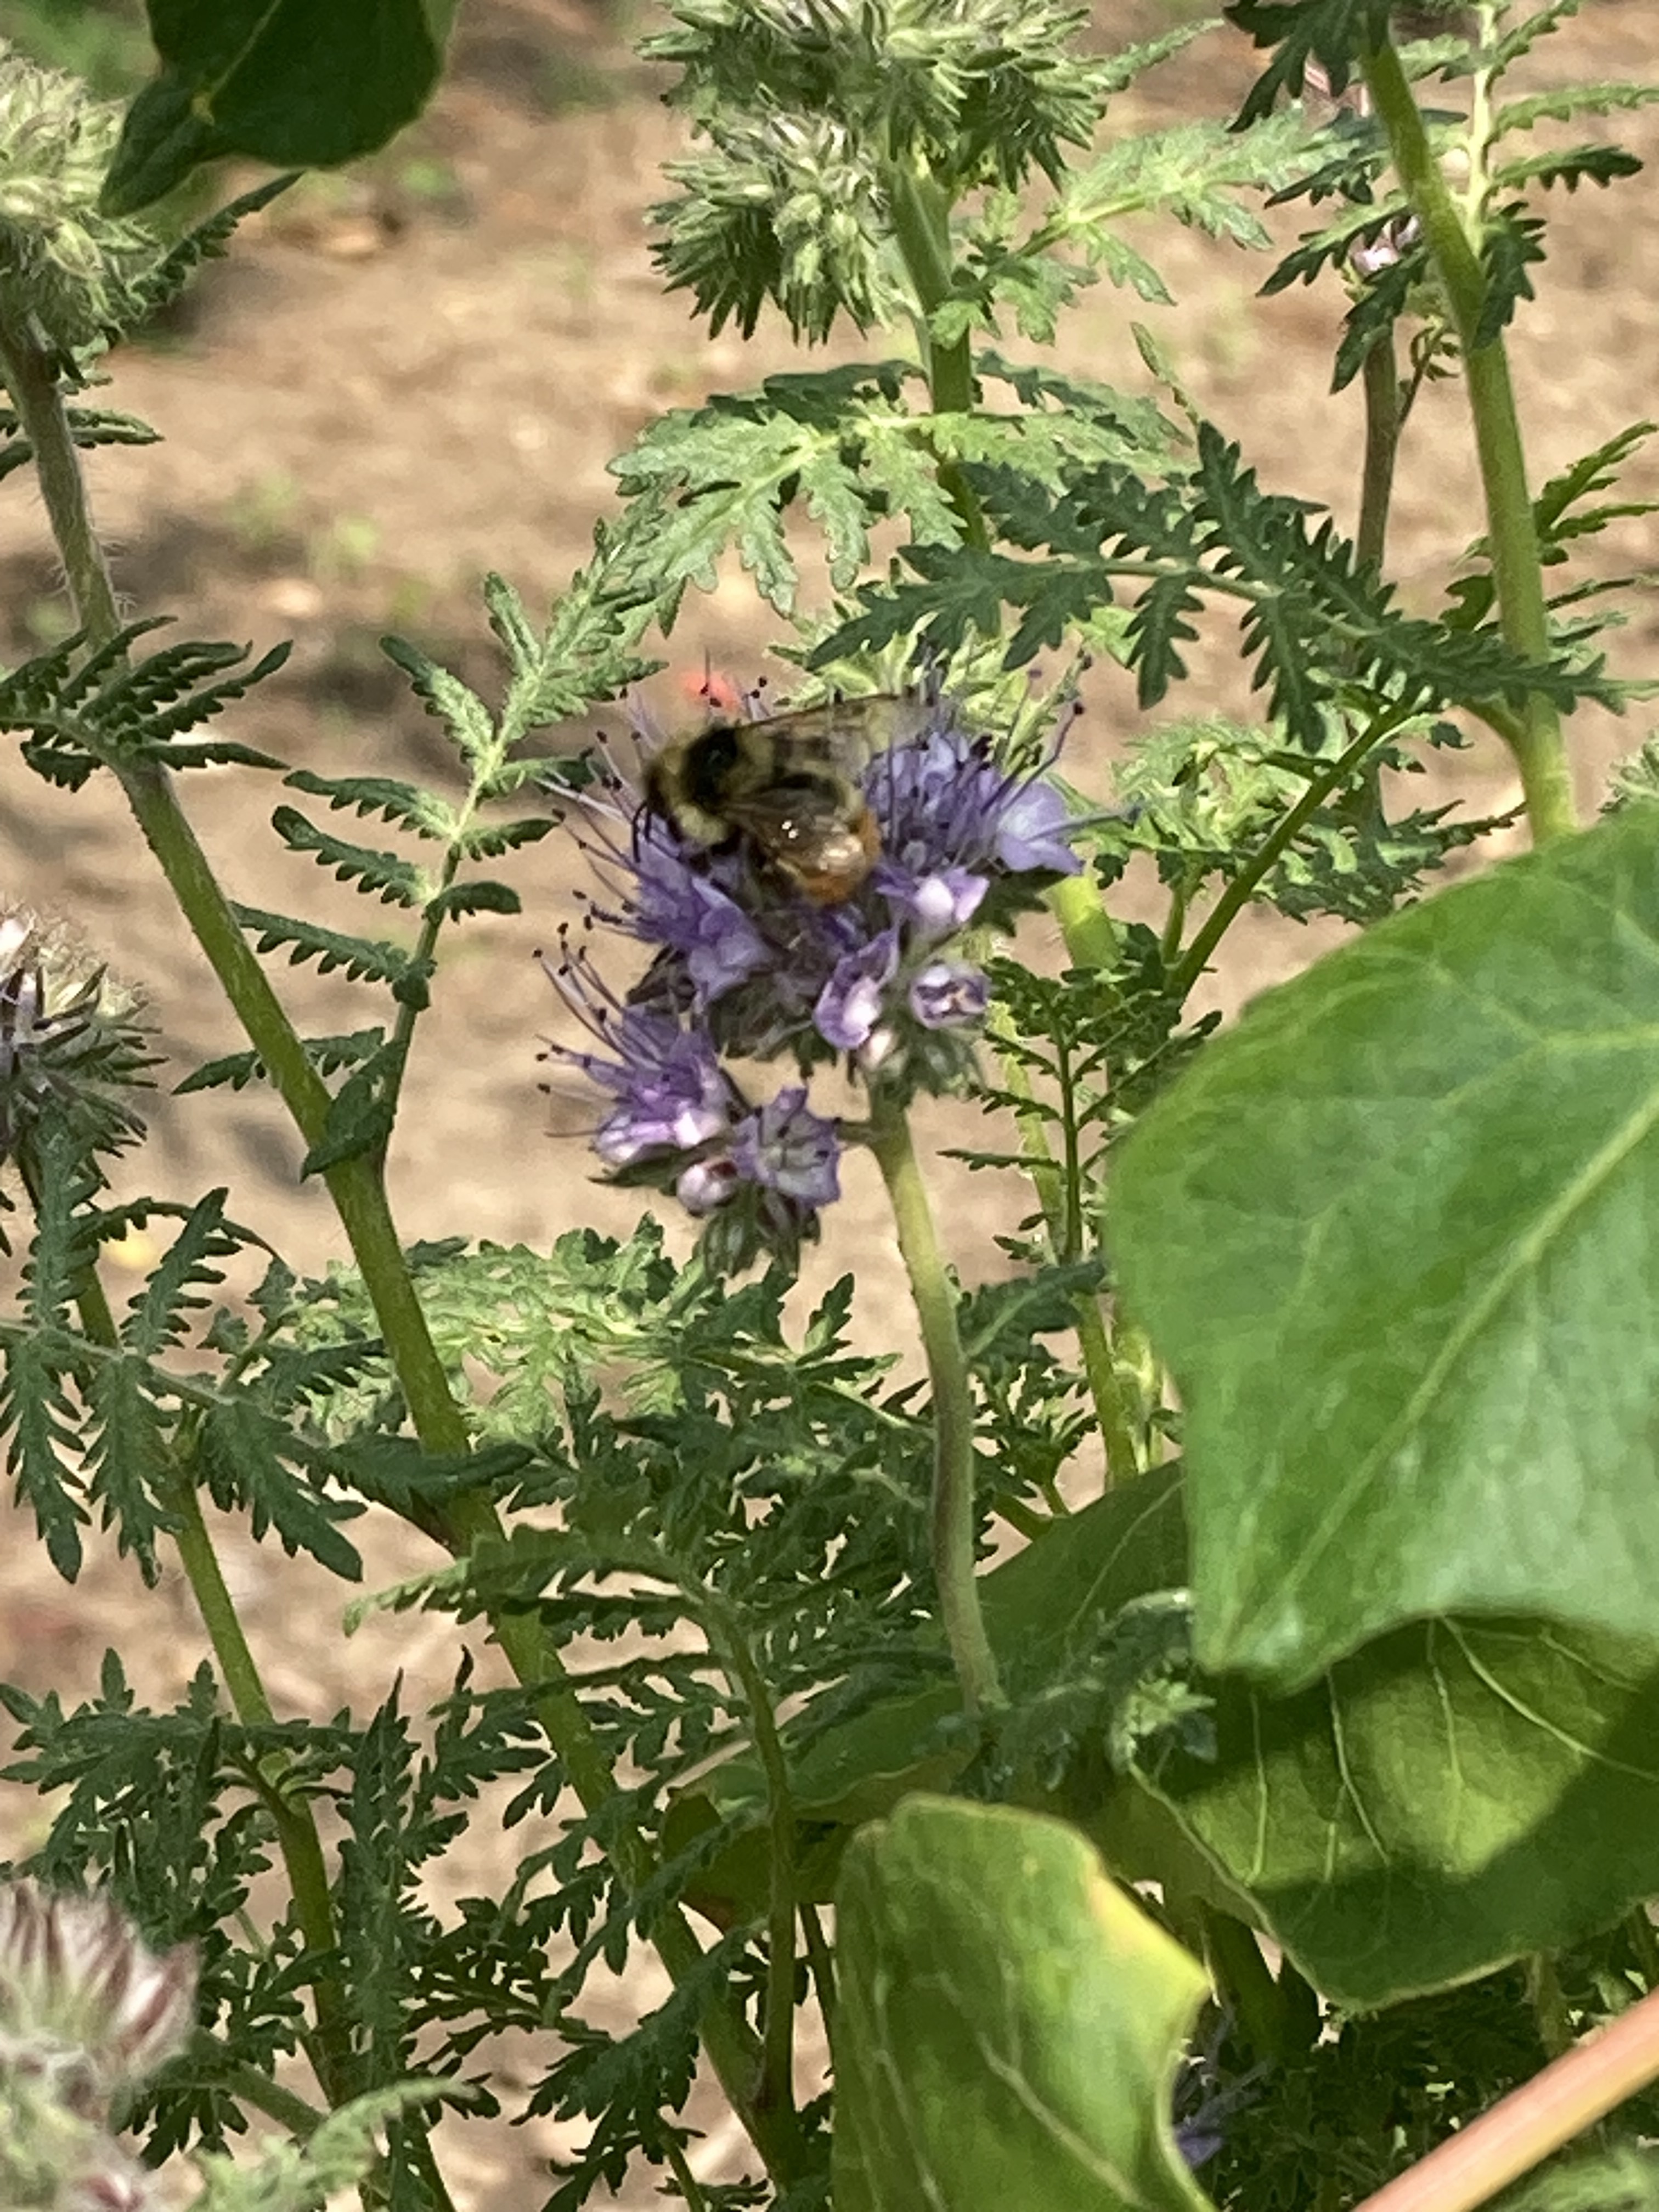 Mother Nature's® Backyard Pollinators Blend